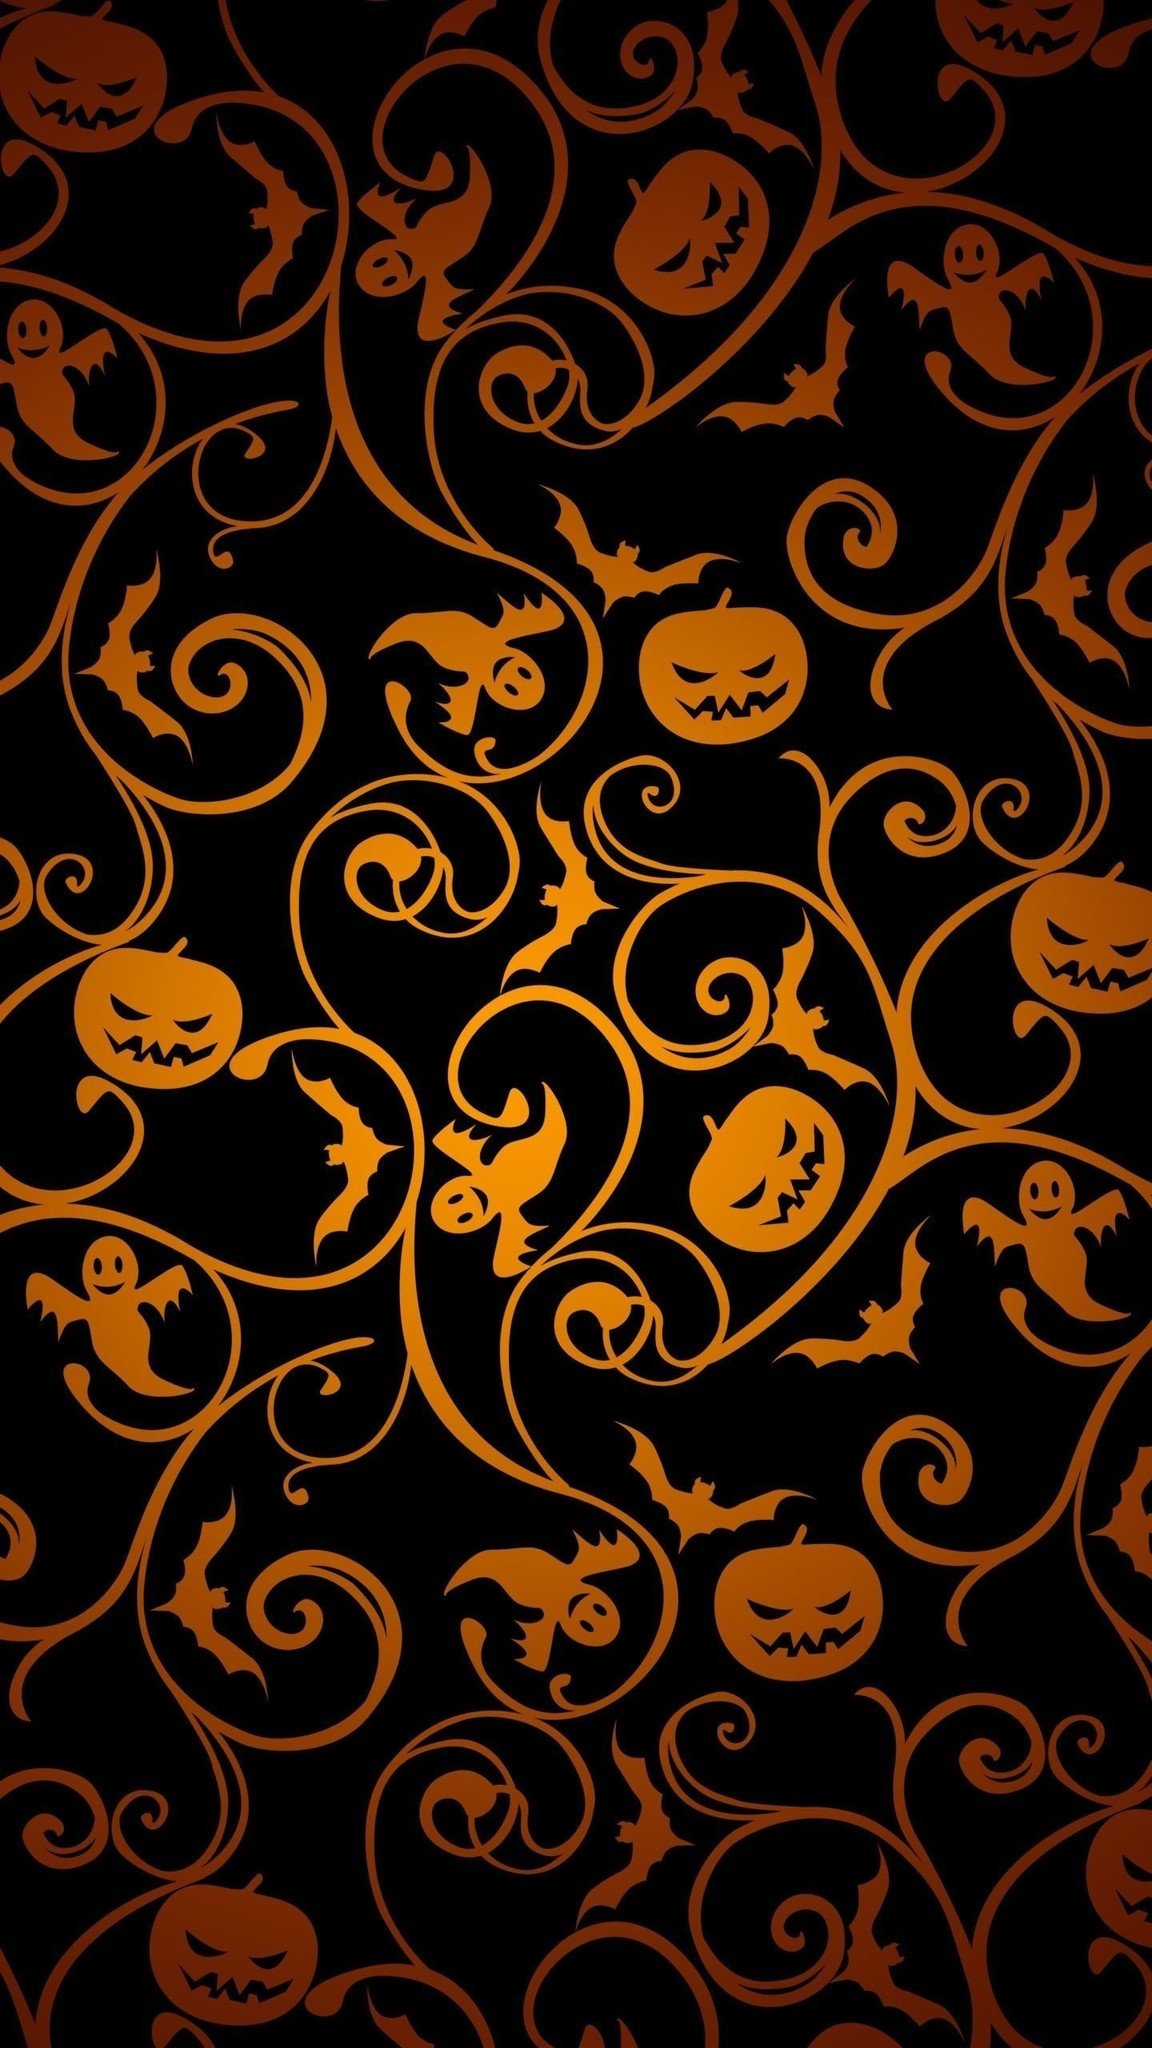 Orange pumpkins, ghosts, bats pattern against black background